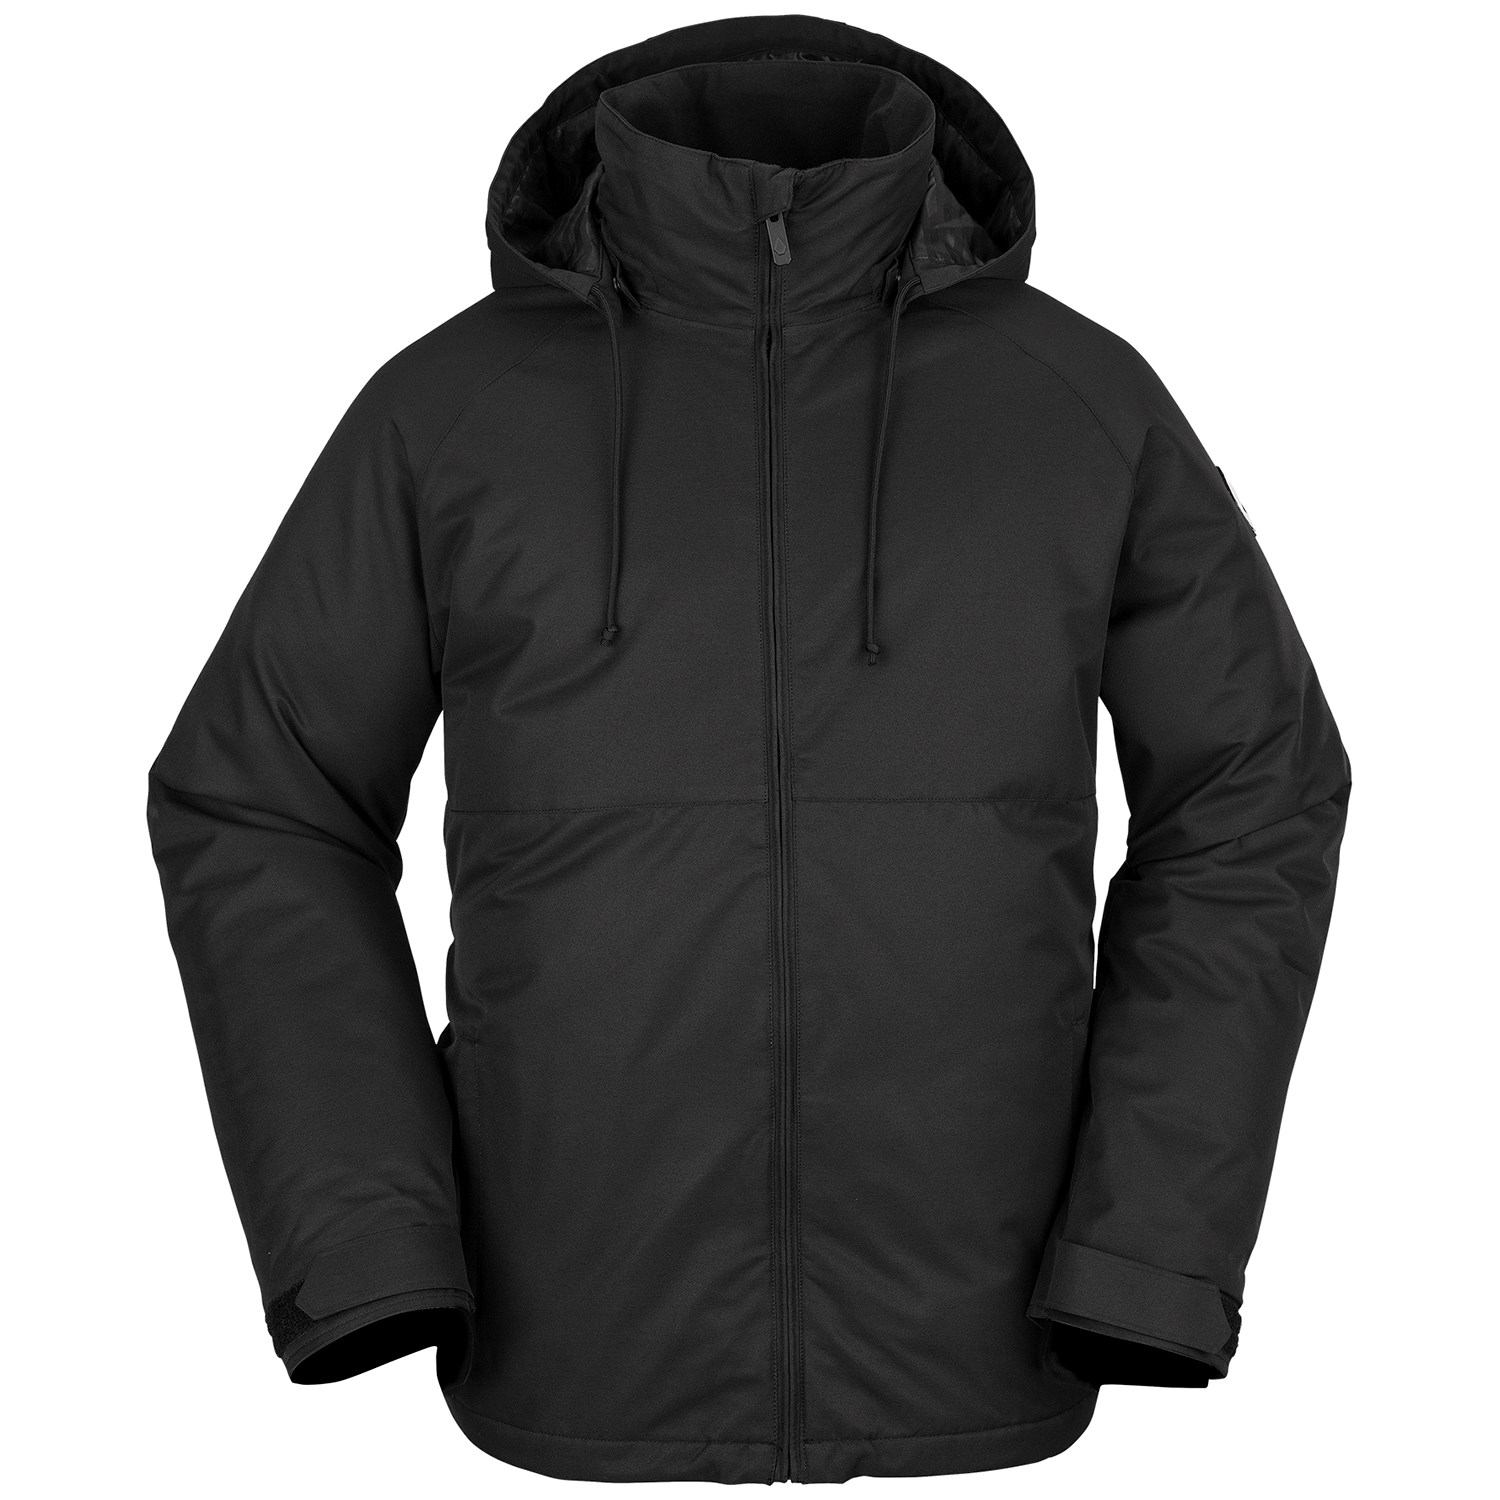 Утепленная куртка Volcom 2836 Insulated, черный утепленная куртка volcom fawn insulated черный